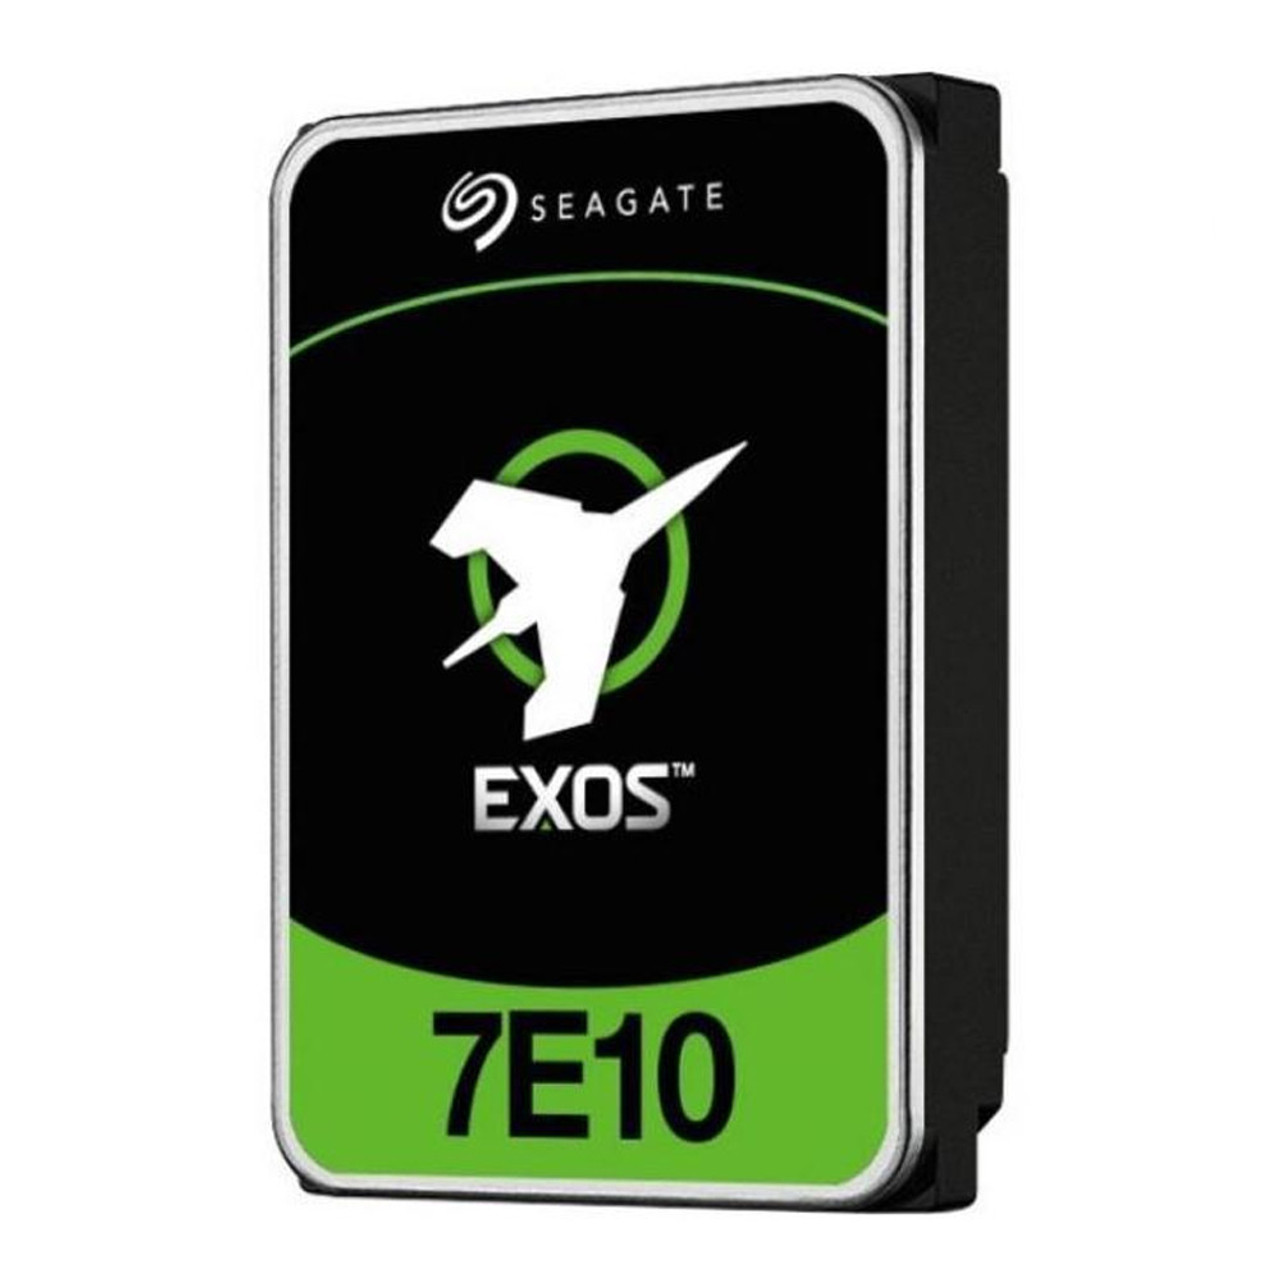 Seagate ST8000NM017B Exos 7E10 8 TB Hard Drive - Internal - SATA/600 (Pack of 2)